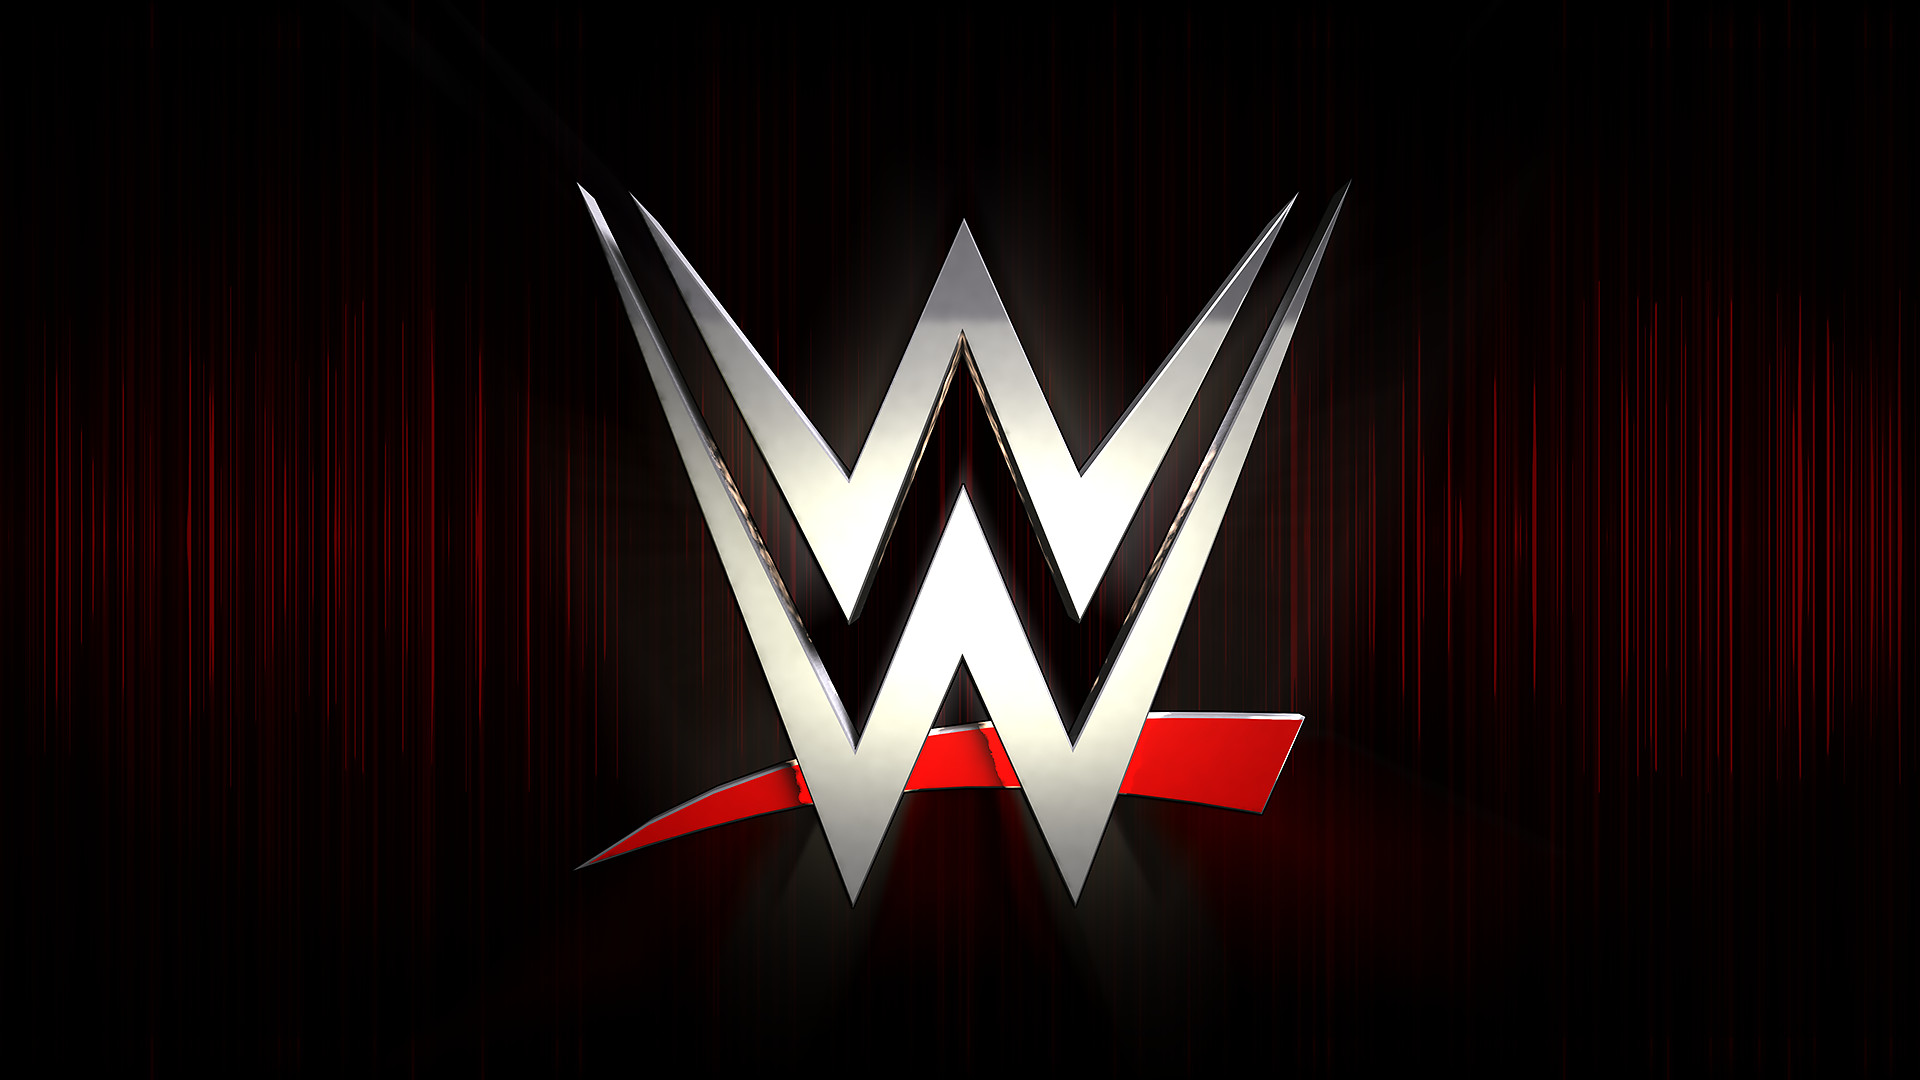 1920x1080 WWE Superstar John Cena New HD Wallpapers Free Download - Dazzling Wallpaper  WWE, World Wrestling Entertainment, WWE Wallpapers, All Celebrities o…